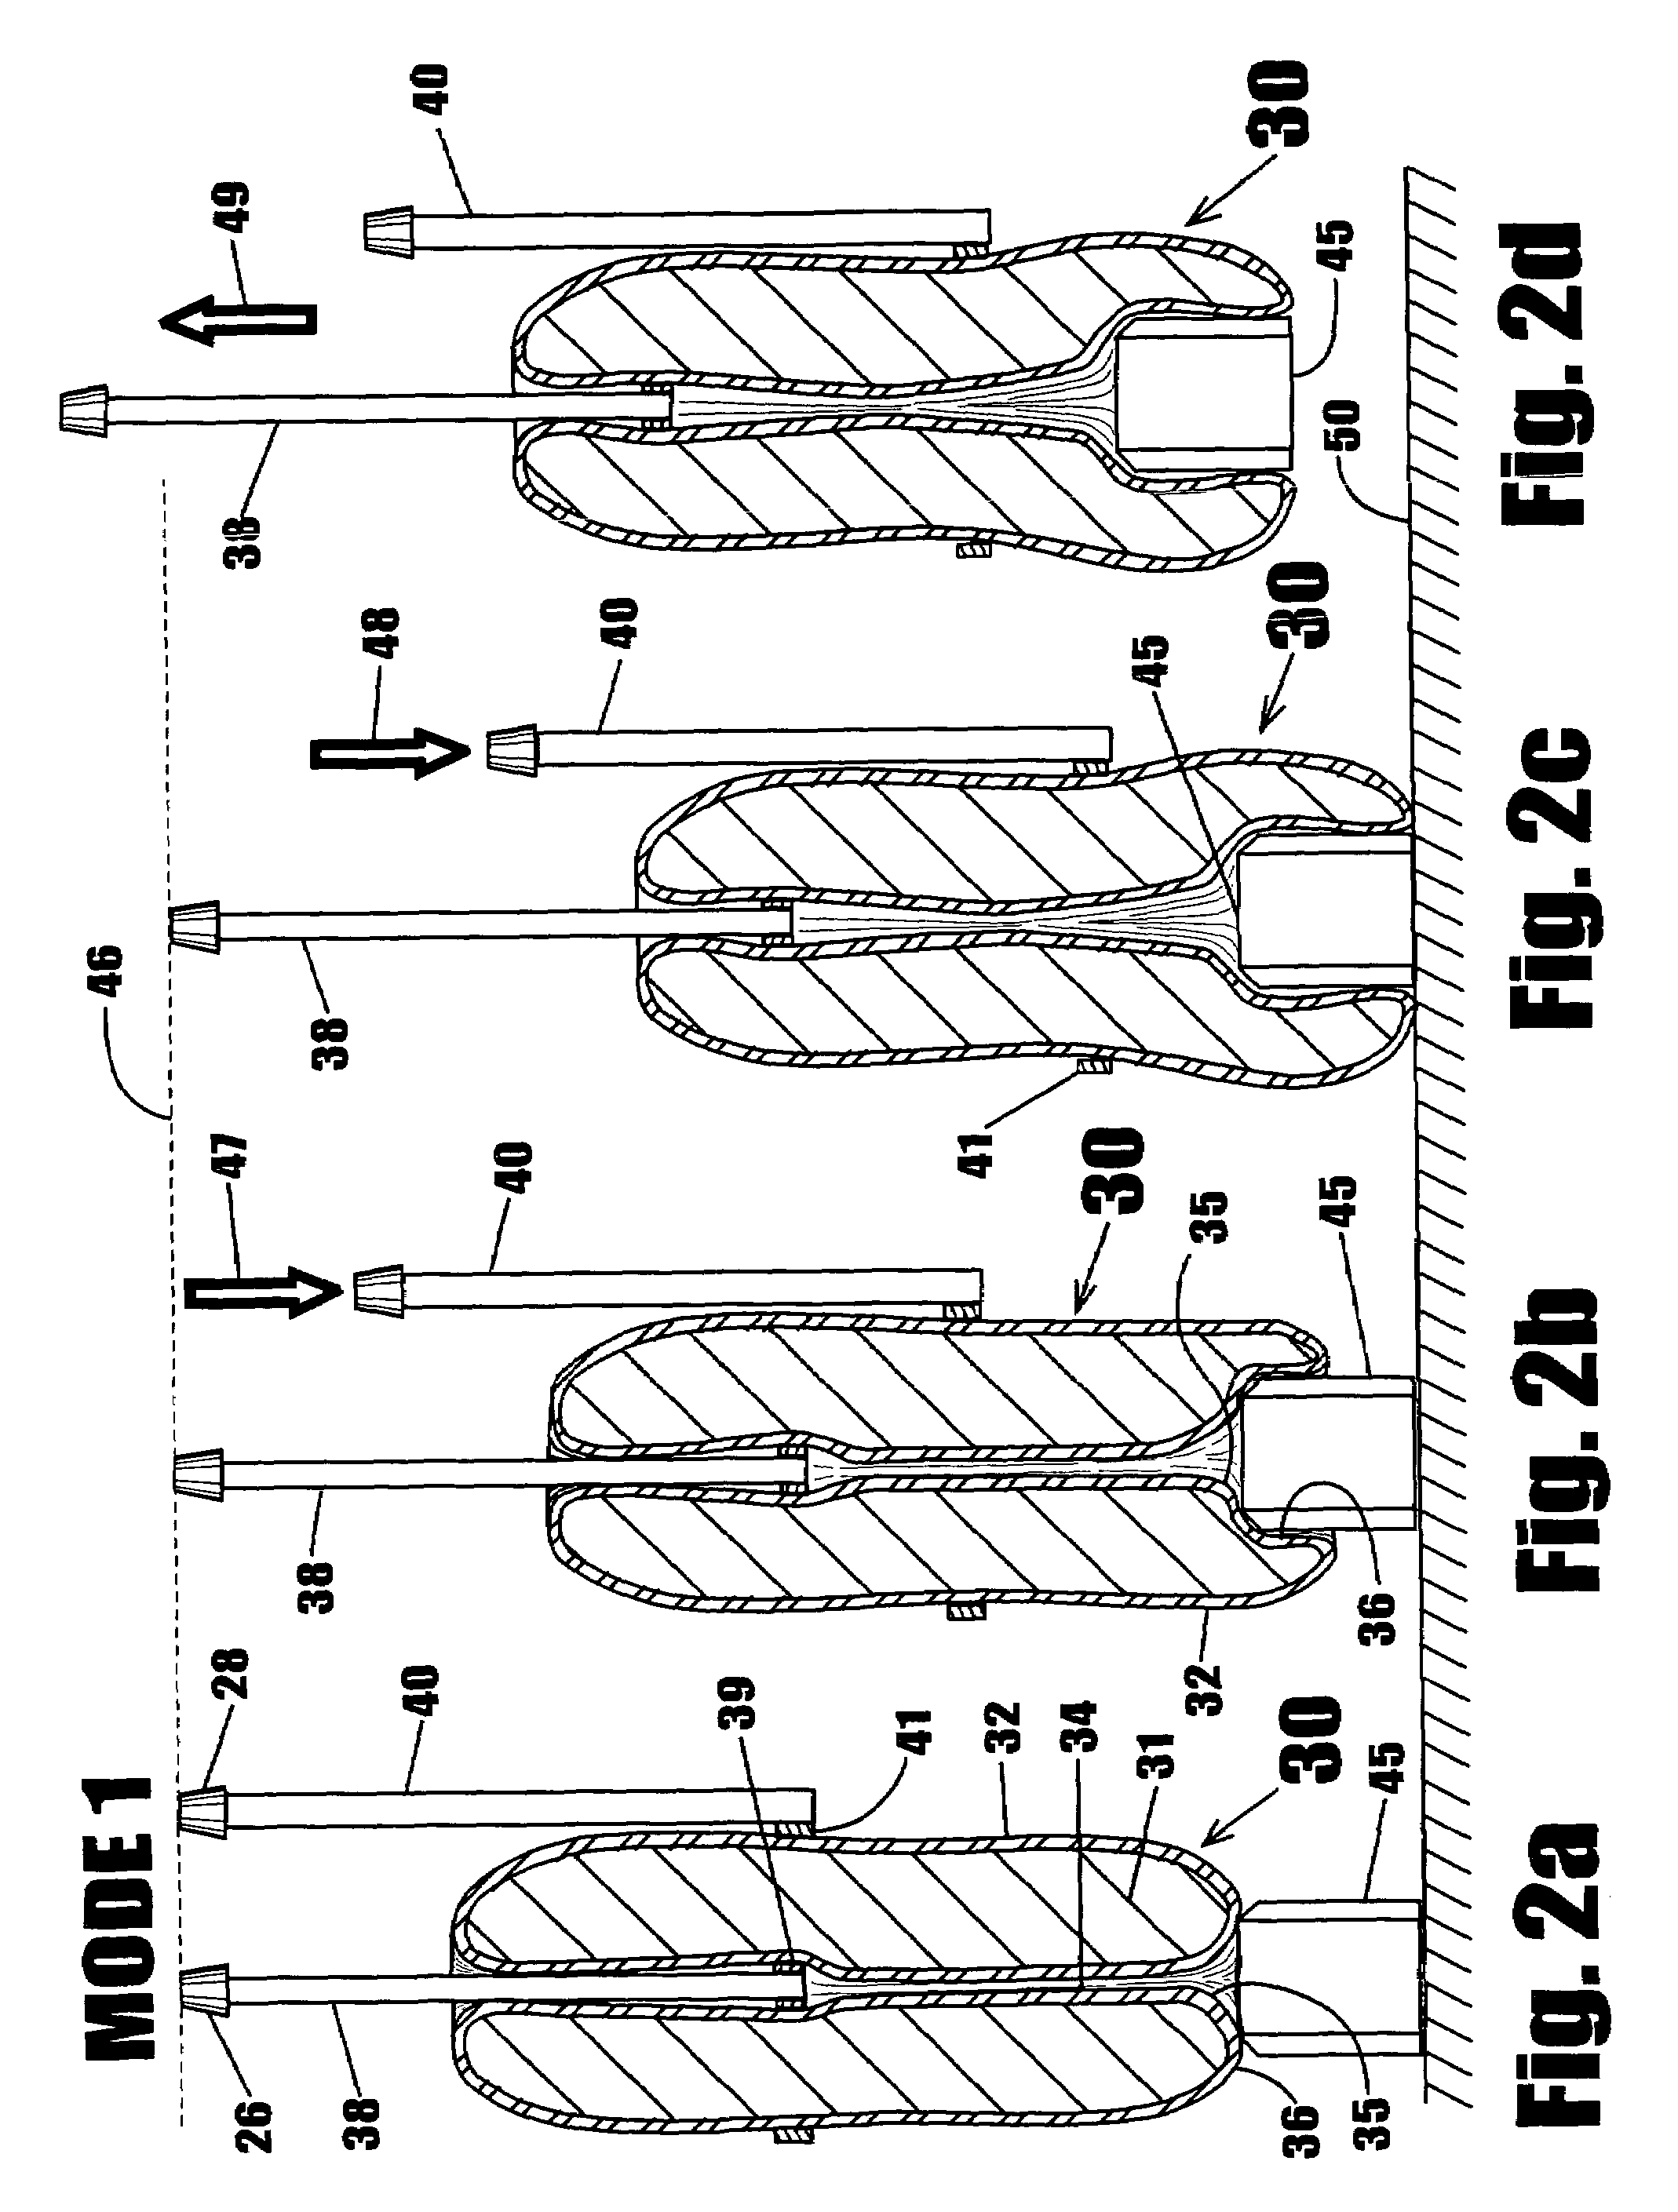 Torus-shaped conveyer and gripper